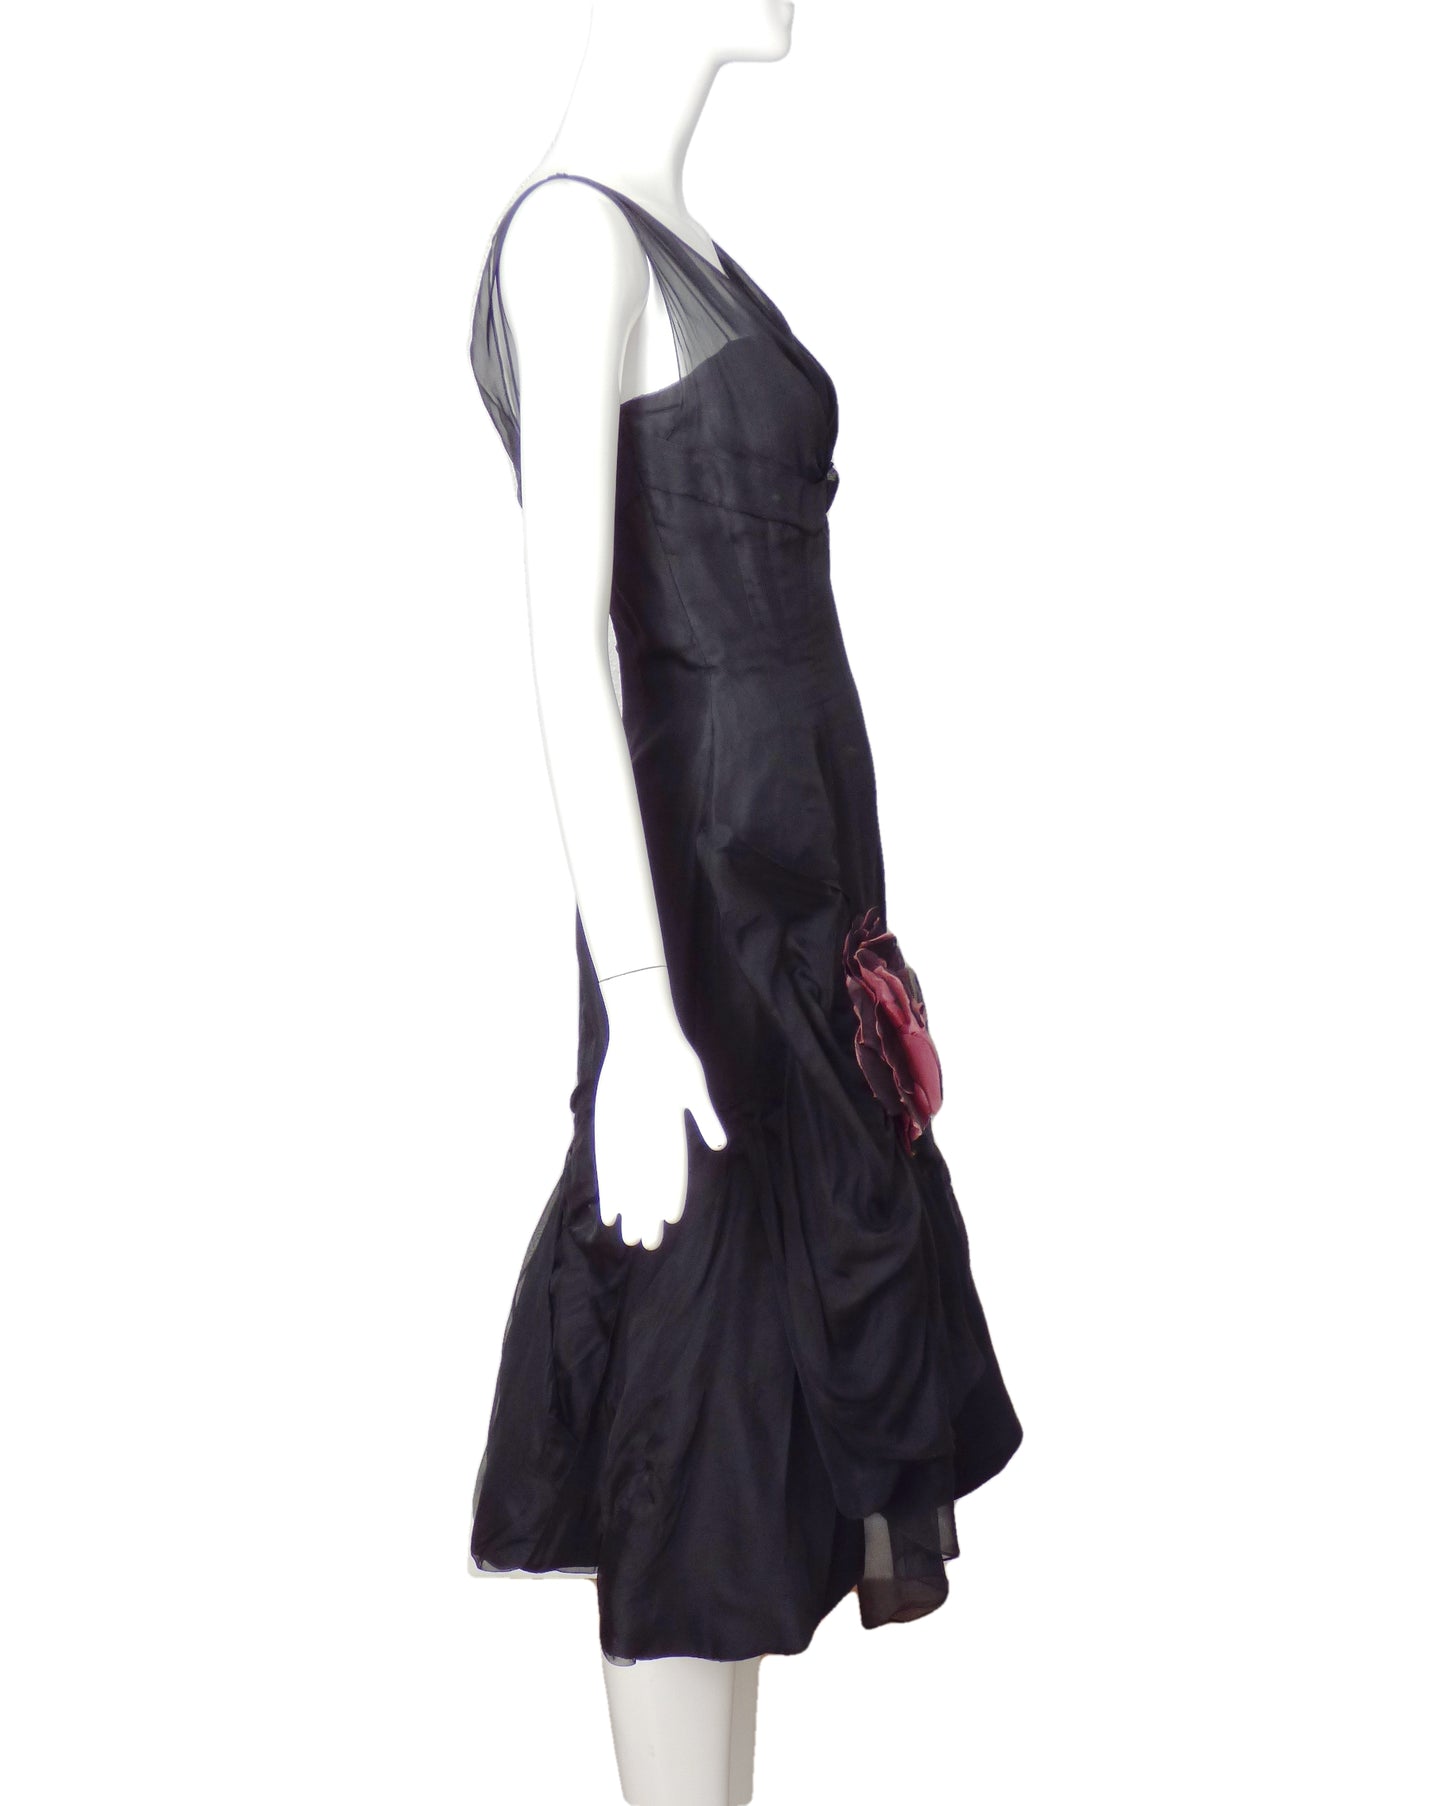 CEIL CHAPMAN-1950s Black Silk Organza Cocktail Dress, Size-2